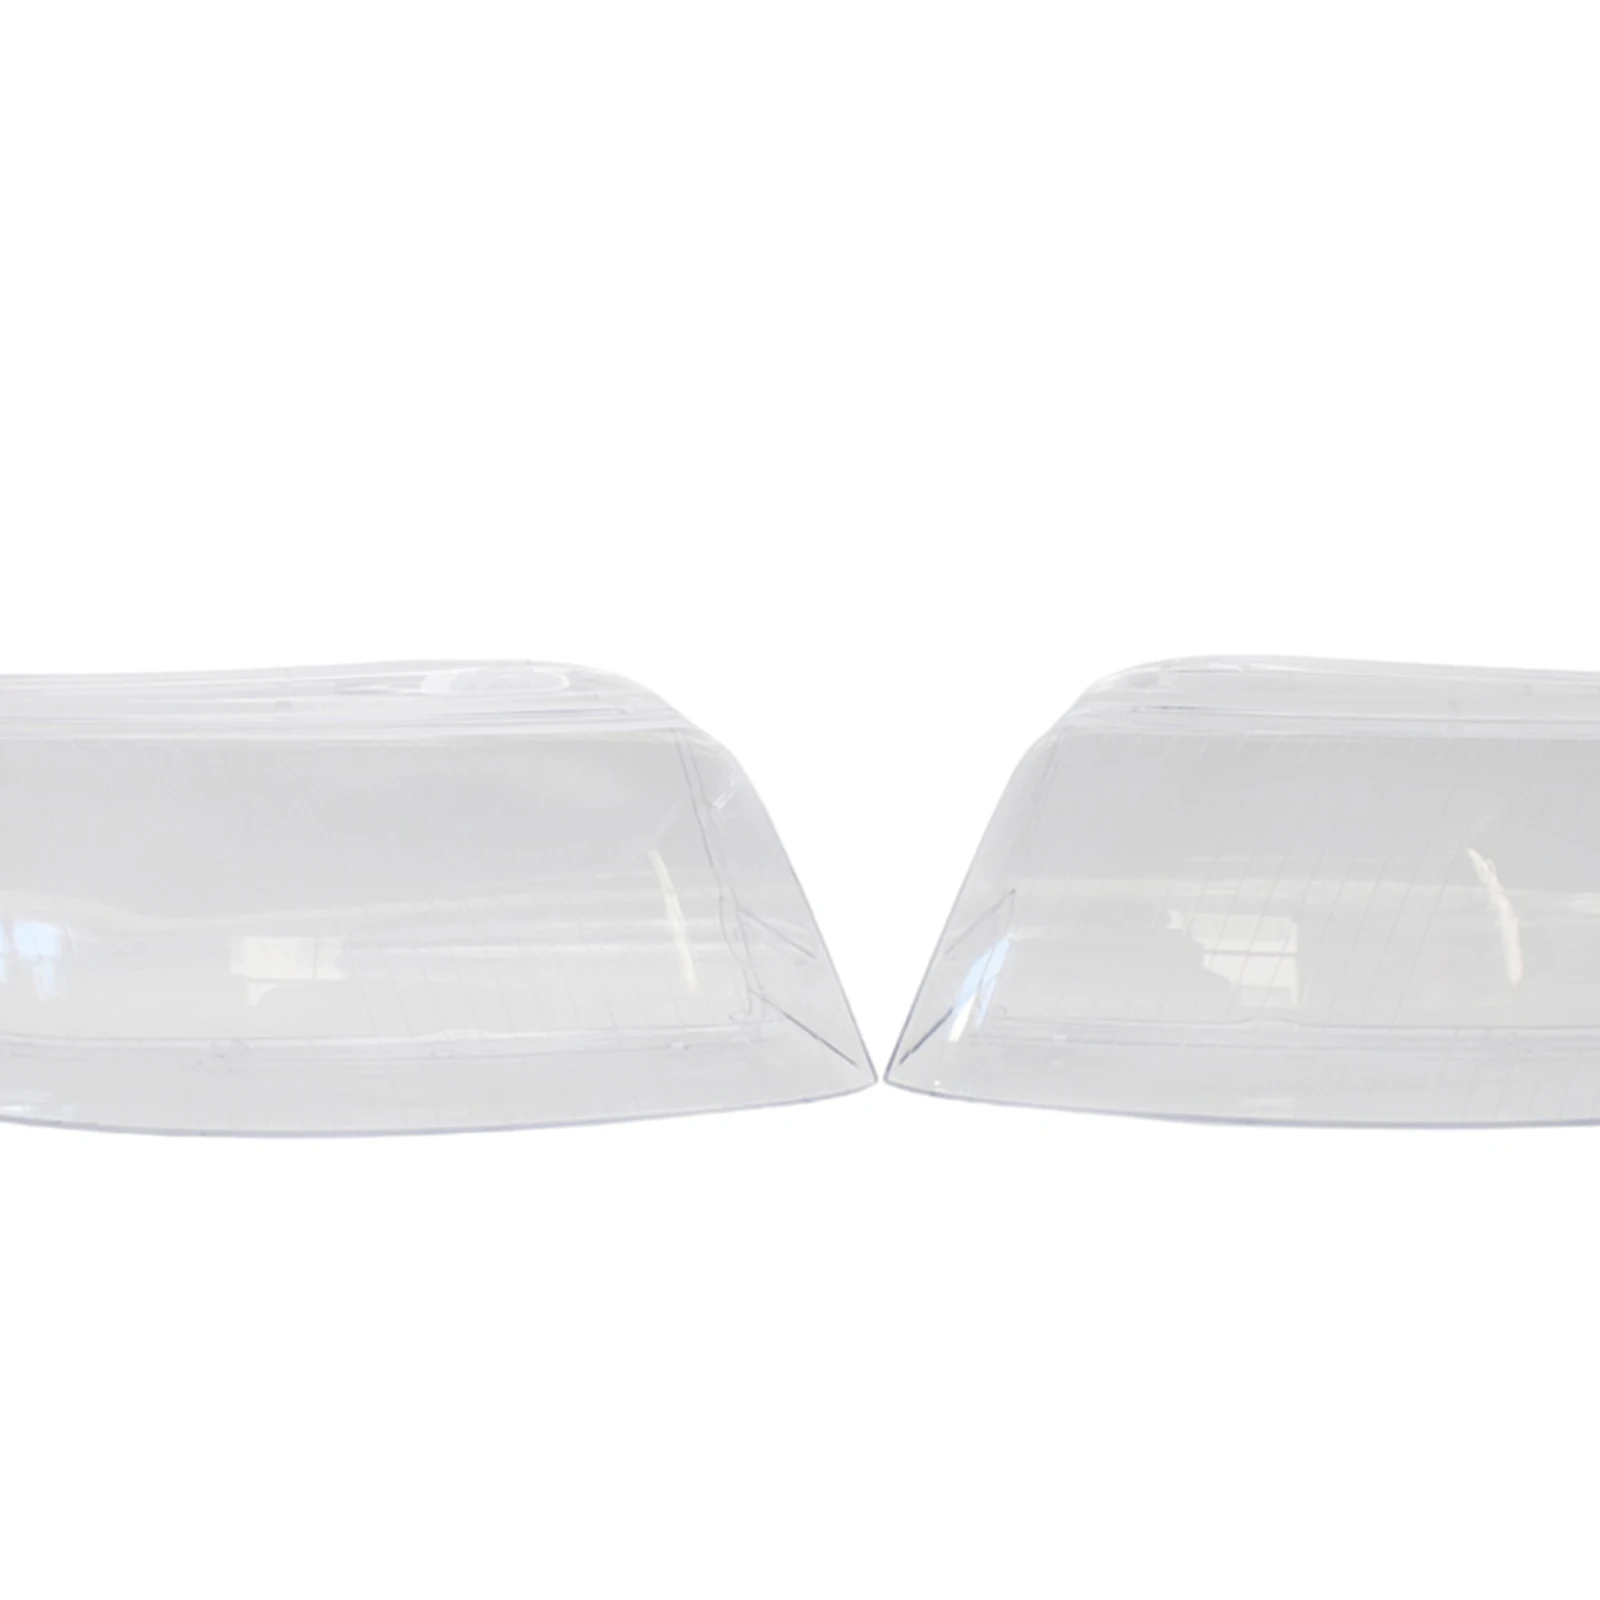 Automotive Pair Headlamp Lens Cover for Audi A4 8E B6 2002-2004 Waterproof